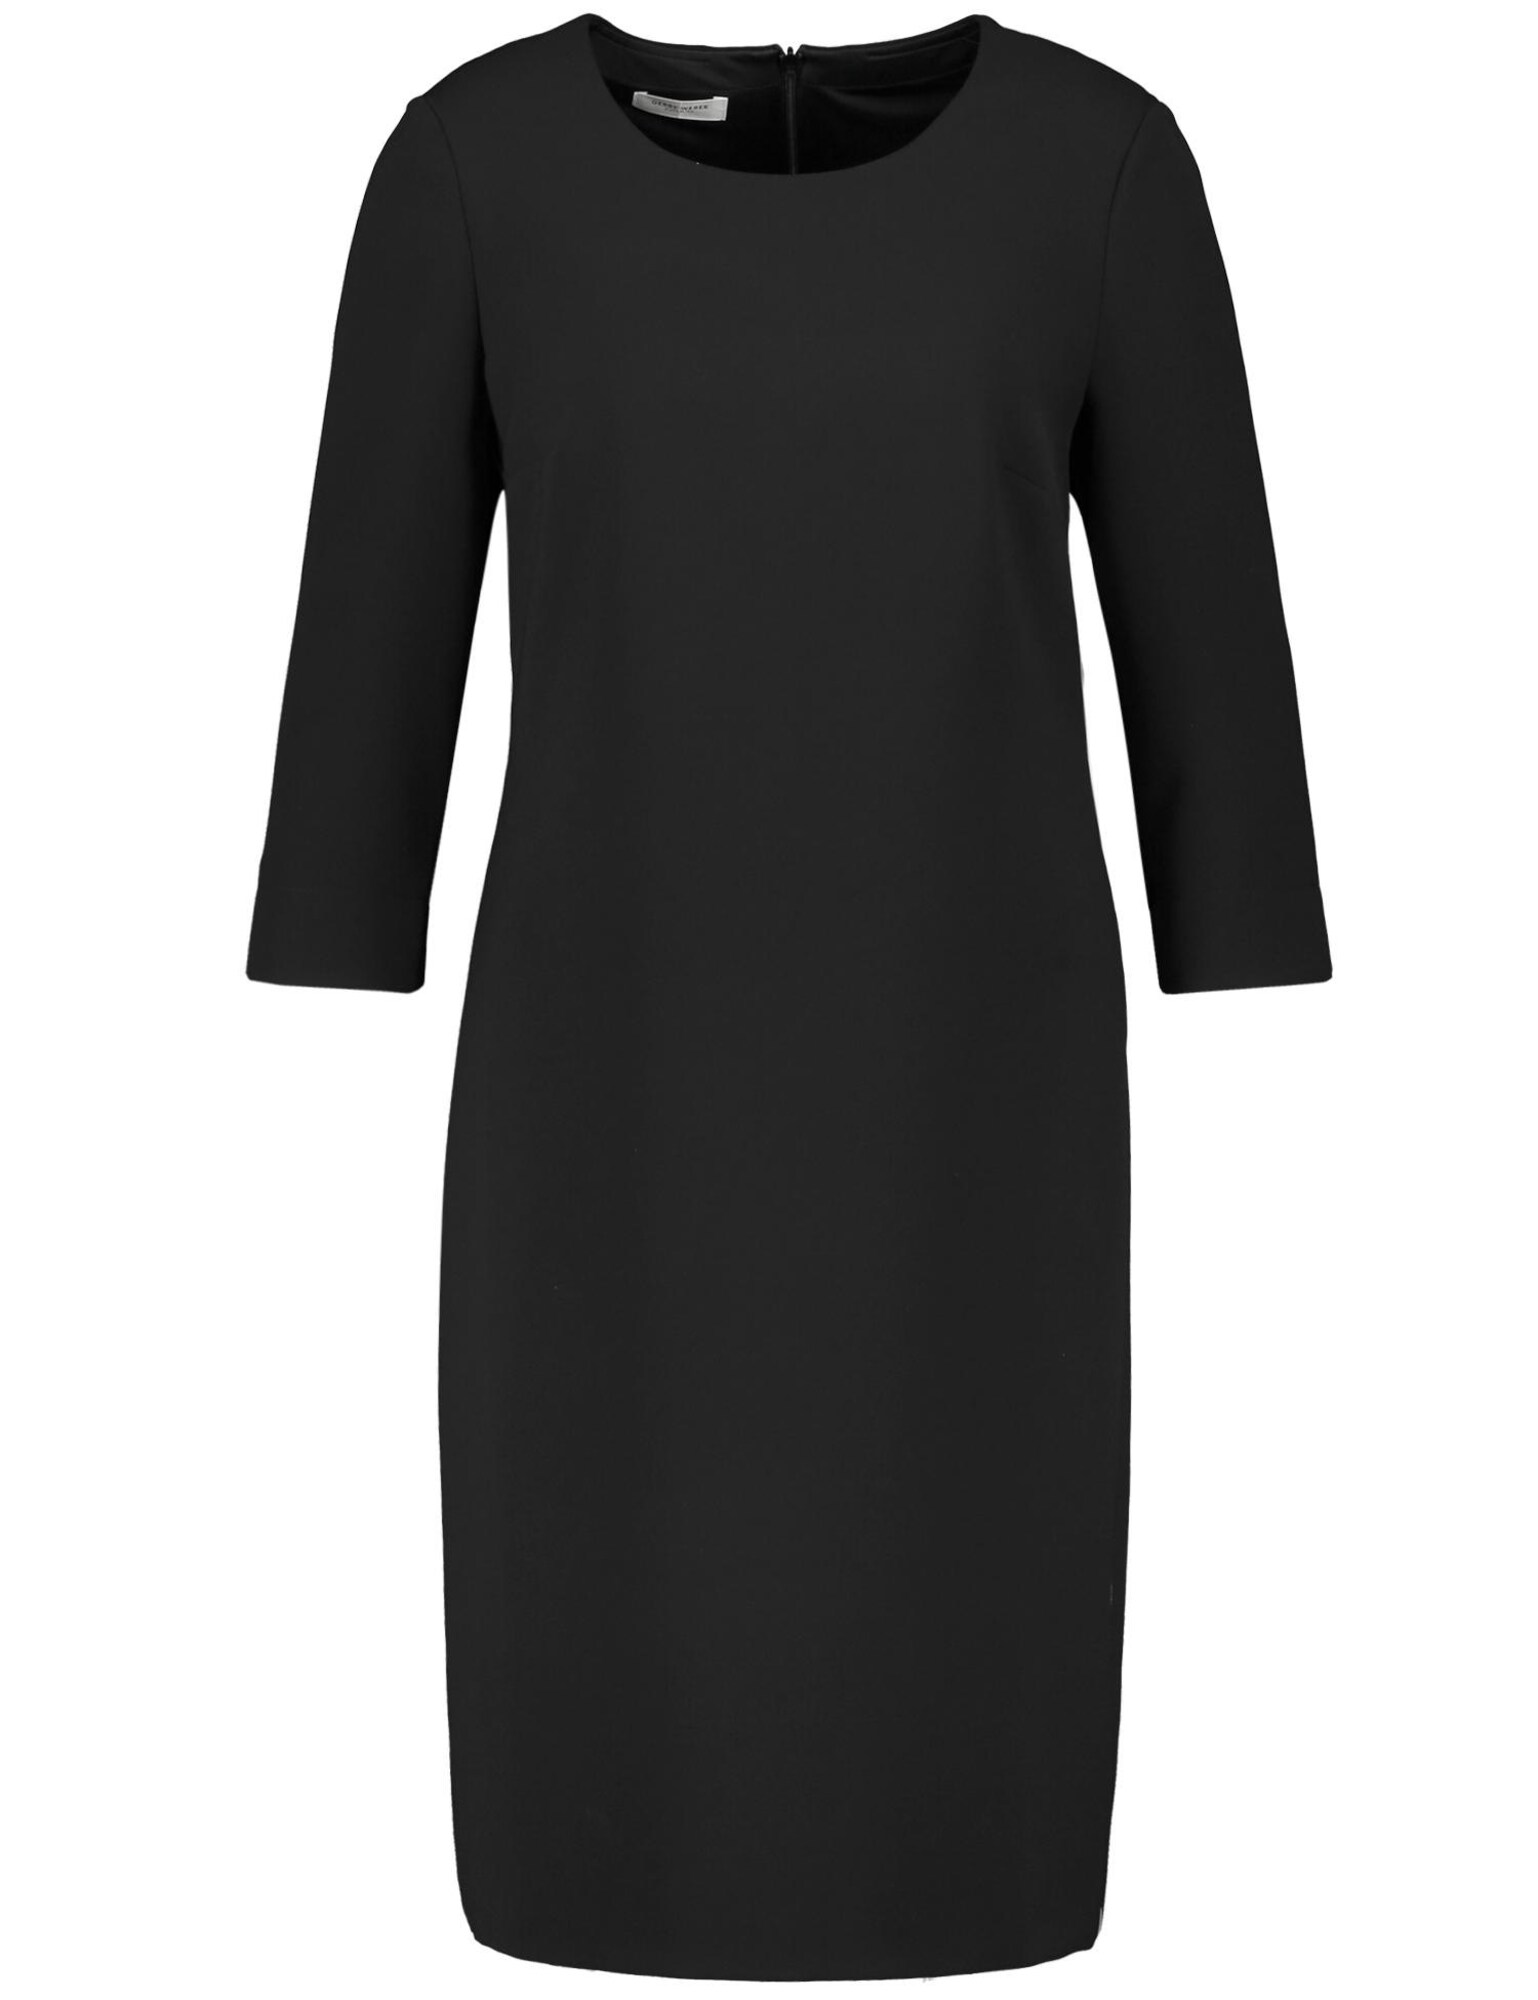 GERRY WEBER Kleid schwarz - Schwarzes Kleid